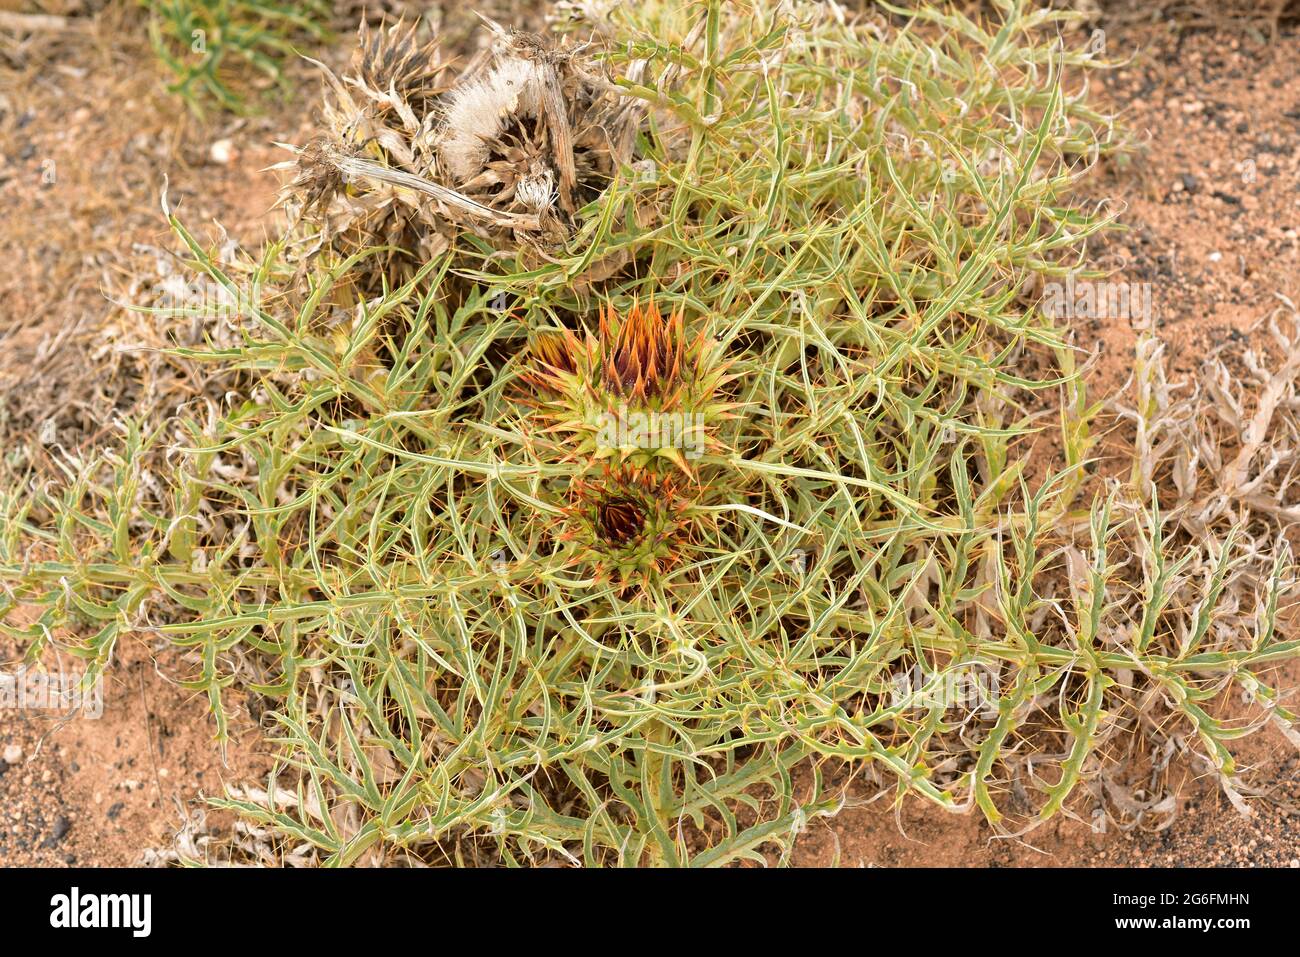 Il cardo selvatico (Cynara cardunculus) è una pianta erbacea perenne. Questa foto è stata scattata a Lanzarote, Isole Canarie, Spagna. Foto Stock